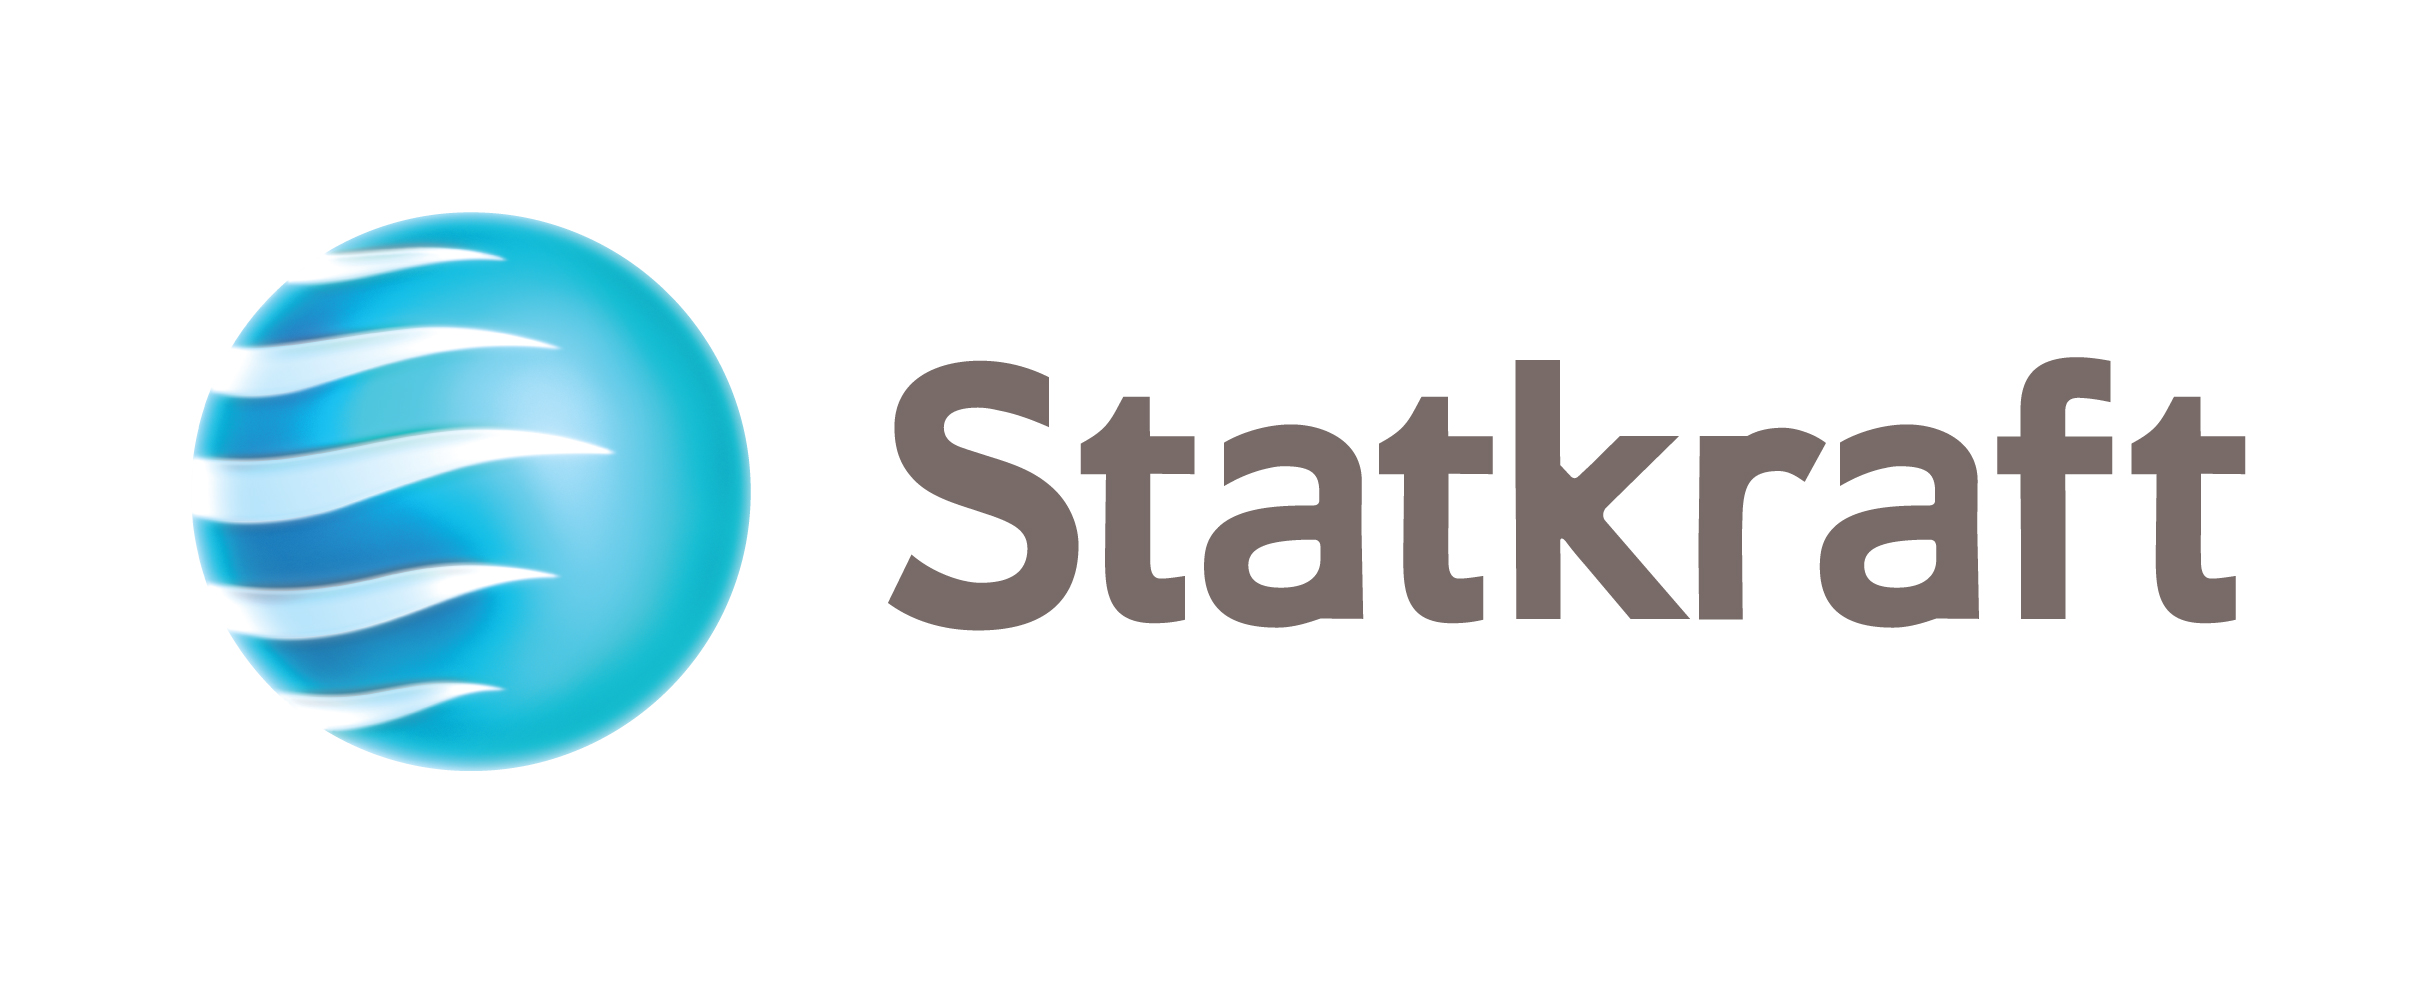 Statkrtaft logo